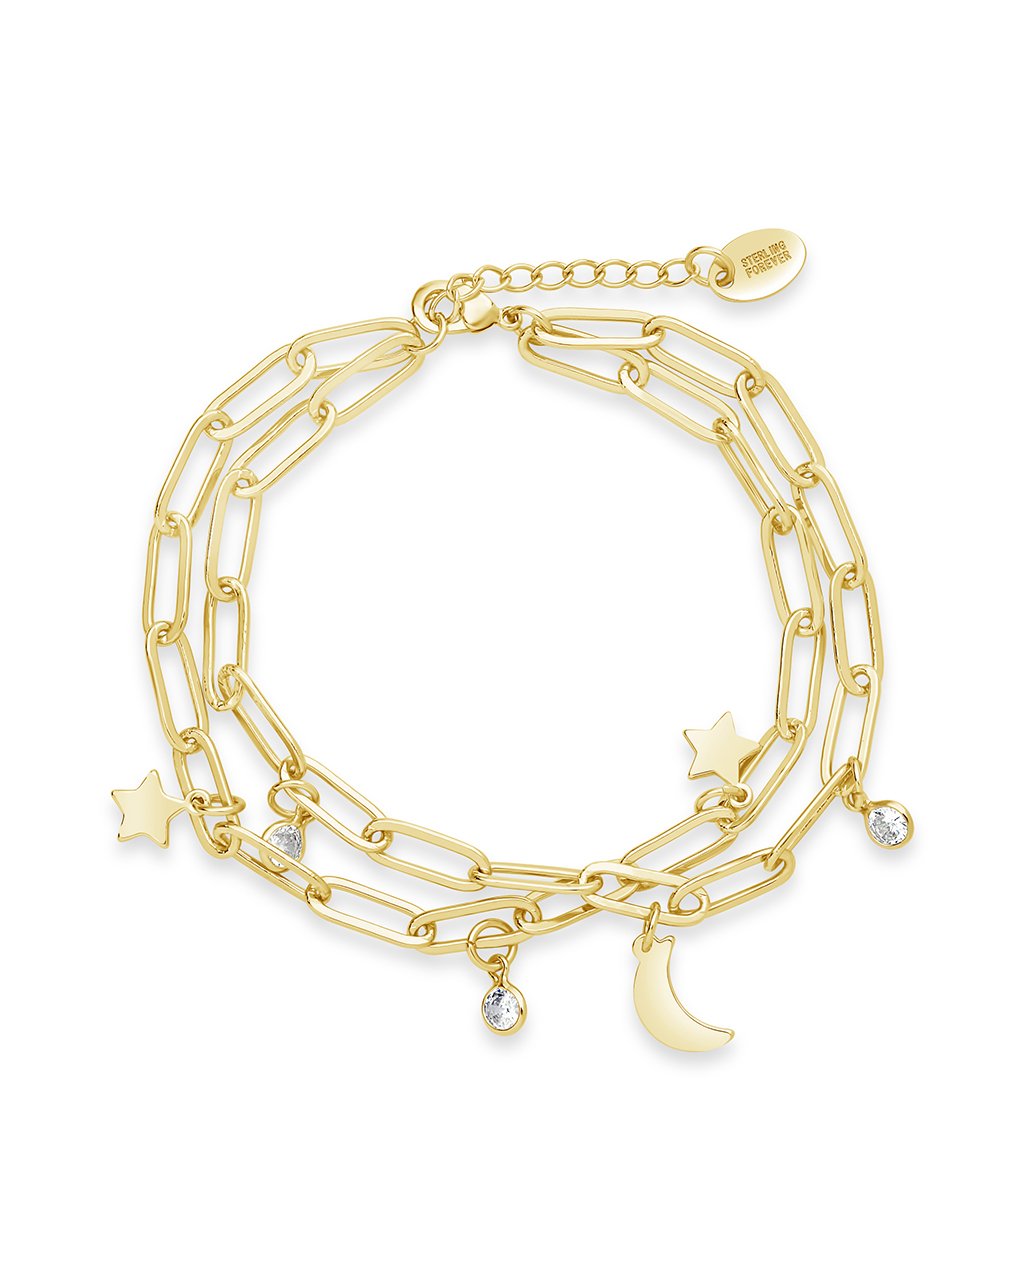 CZ, Moon, & Star Double Chain Bracelet - Sterling Forever